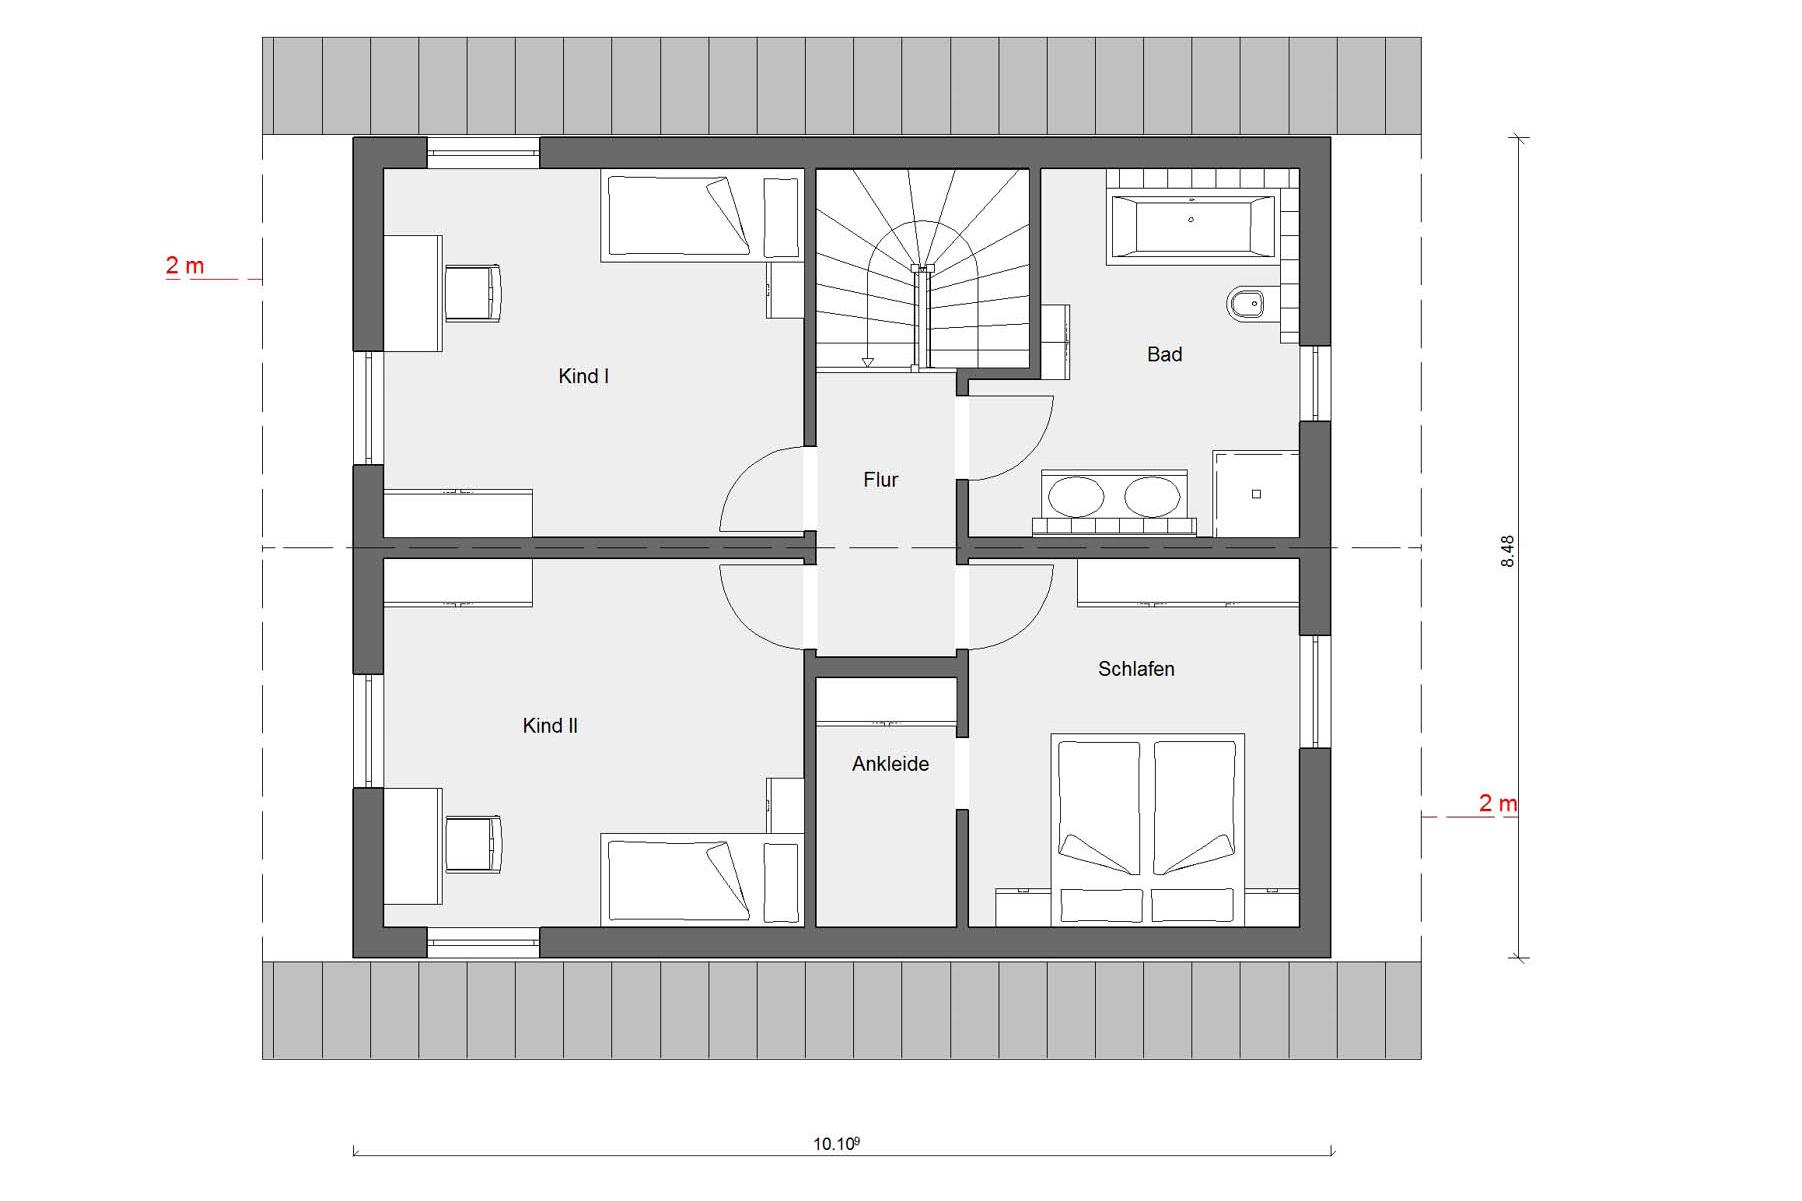 Top floor floor plan E 15-140.4 House with office